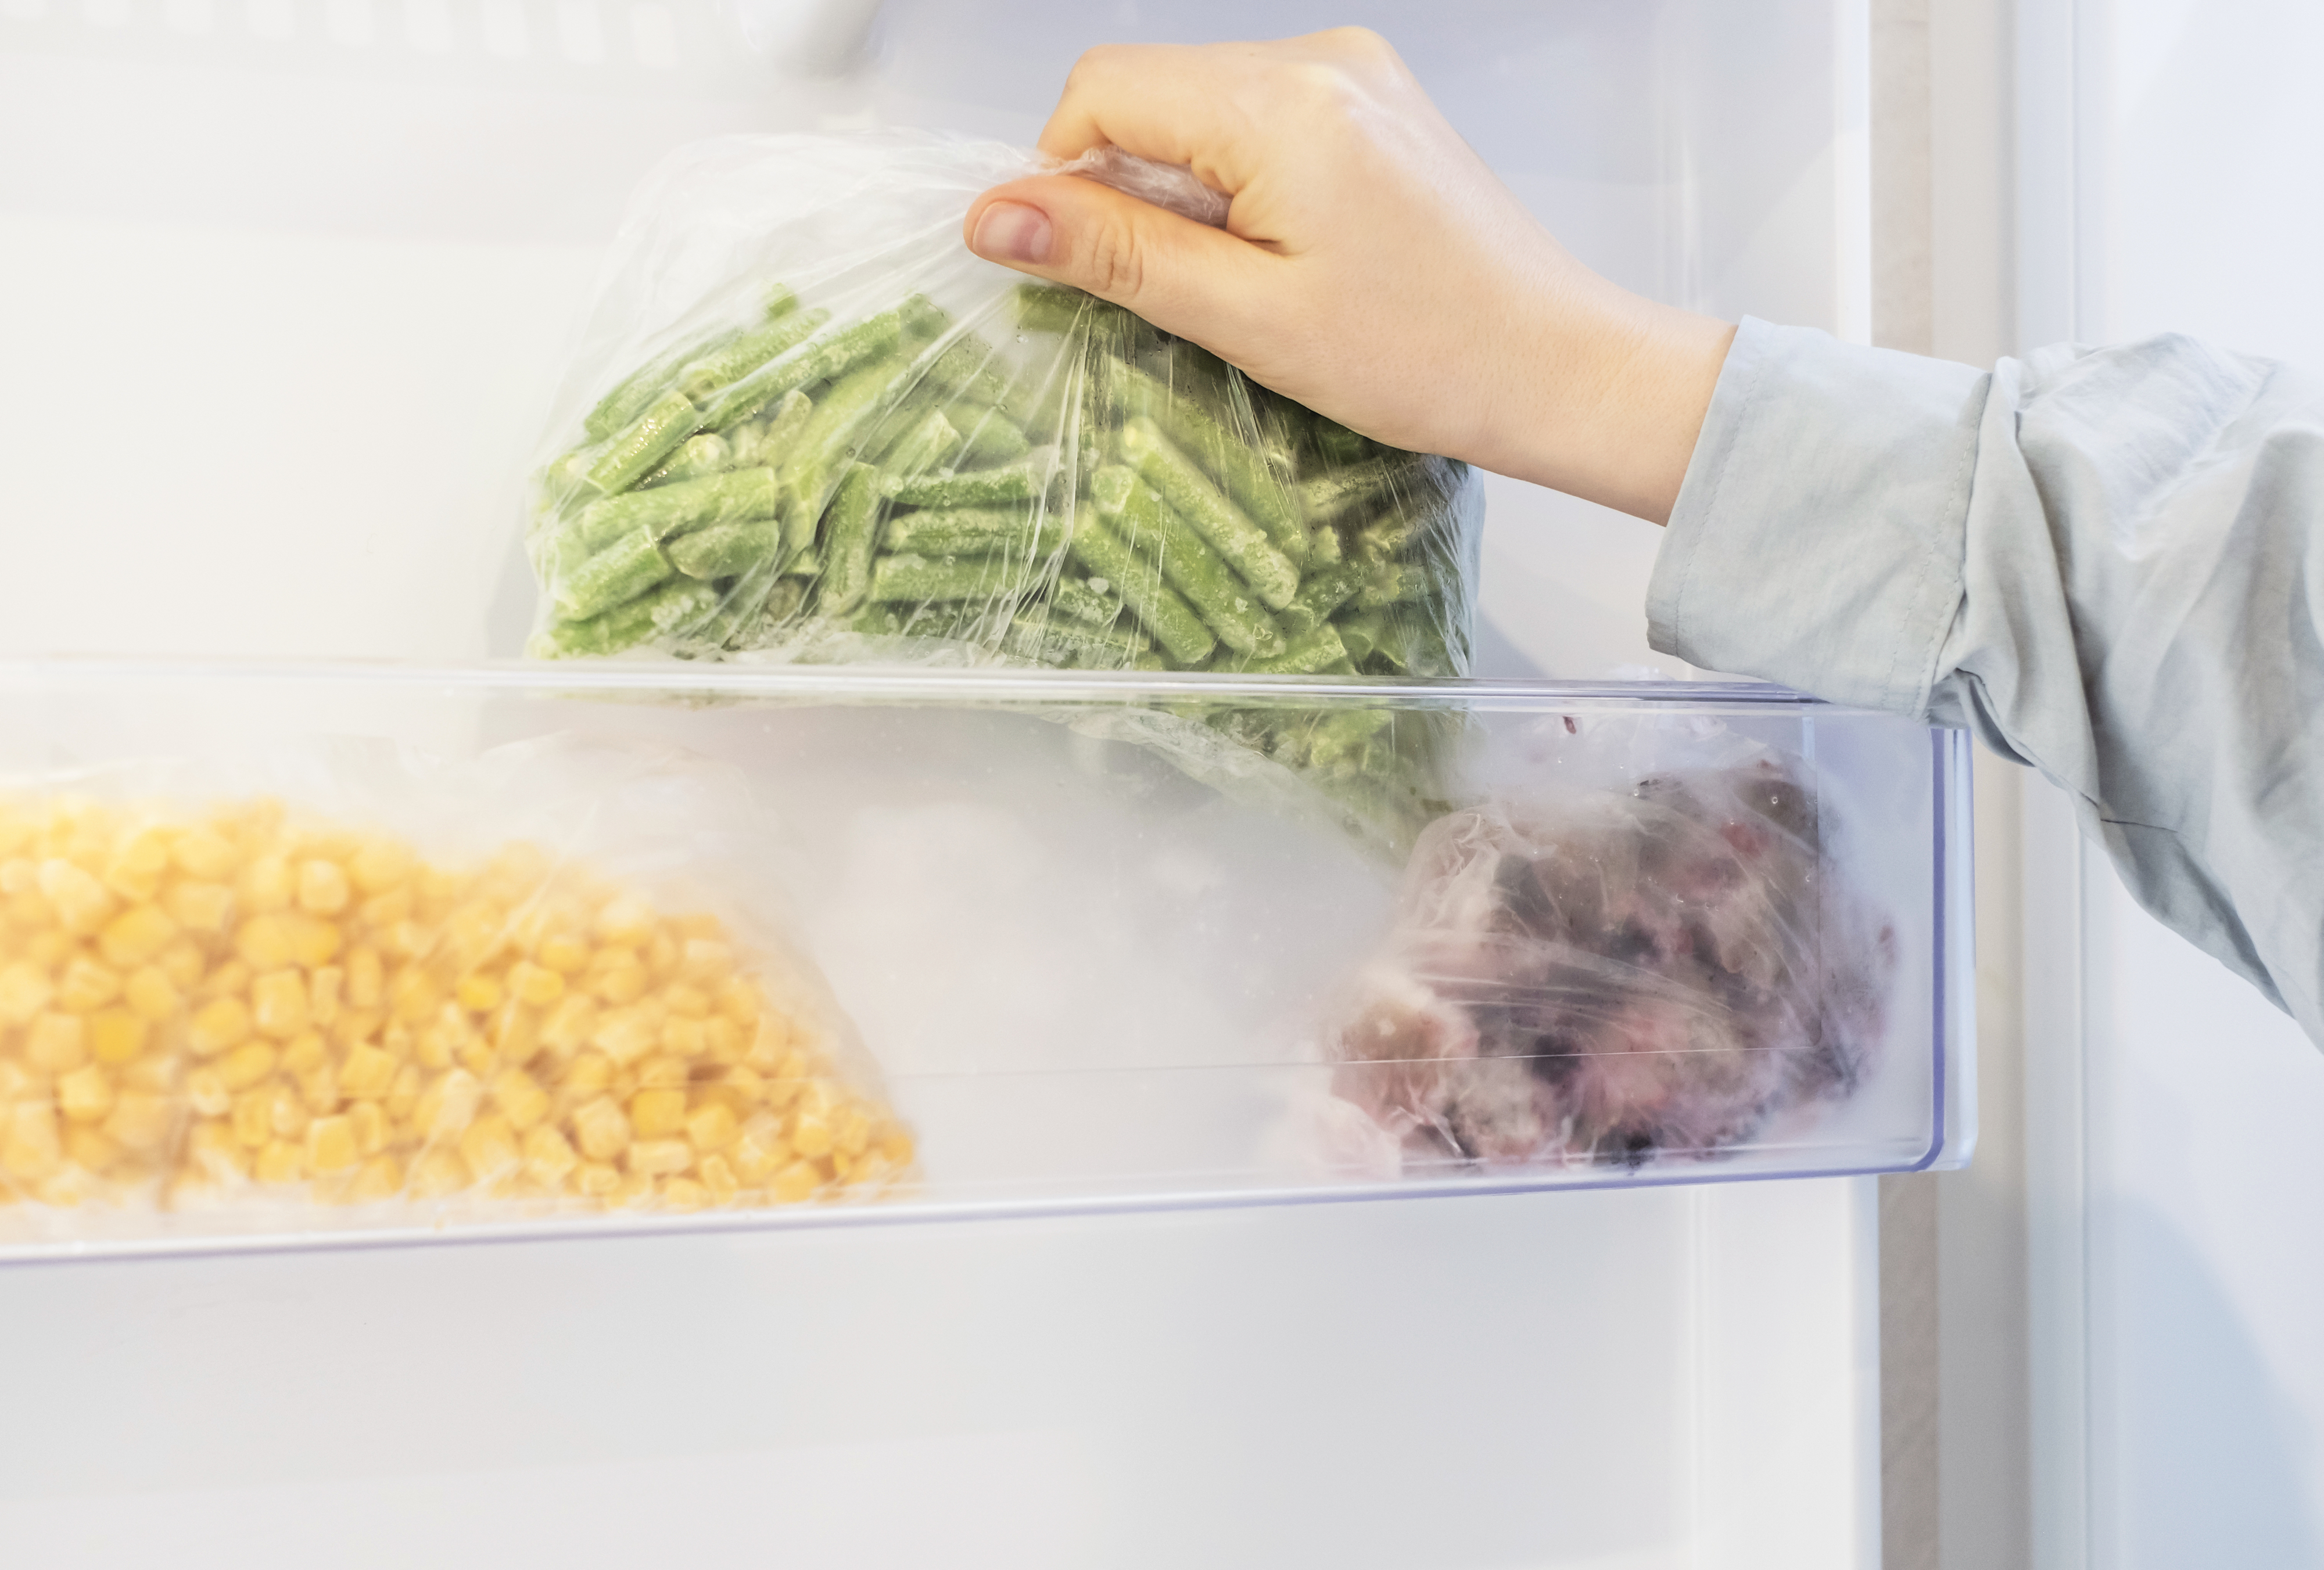 frozen vegetables on the shelf of a freezer